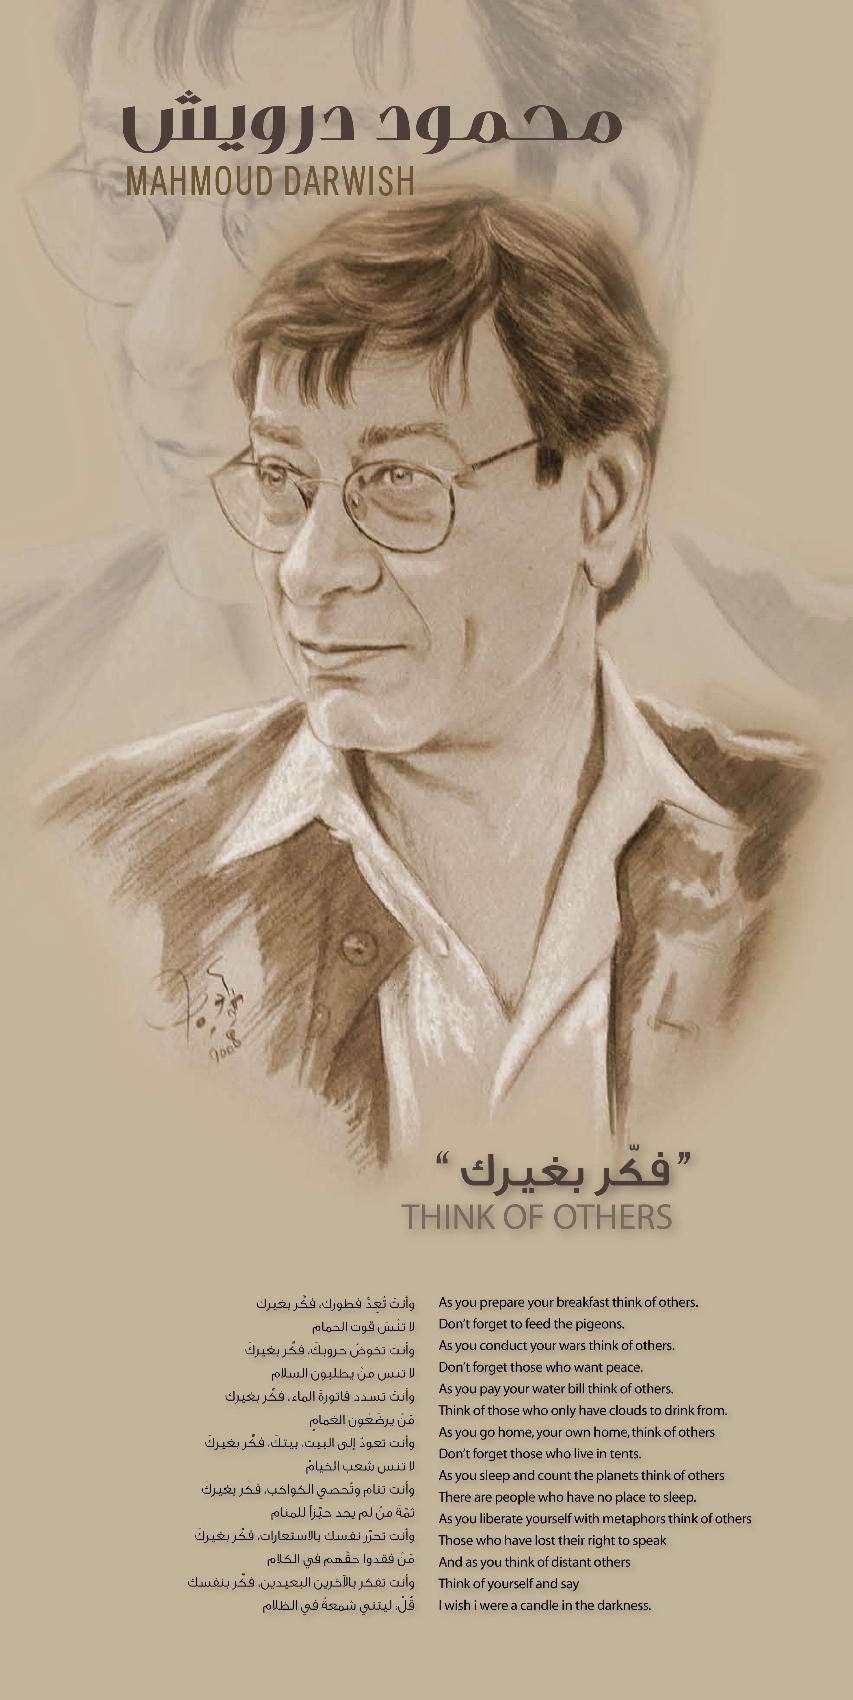 Mahmoud Darwish, World-Renowned Palestinian Poet